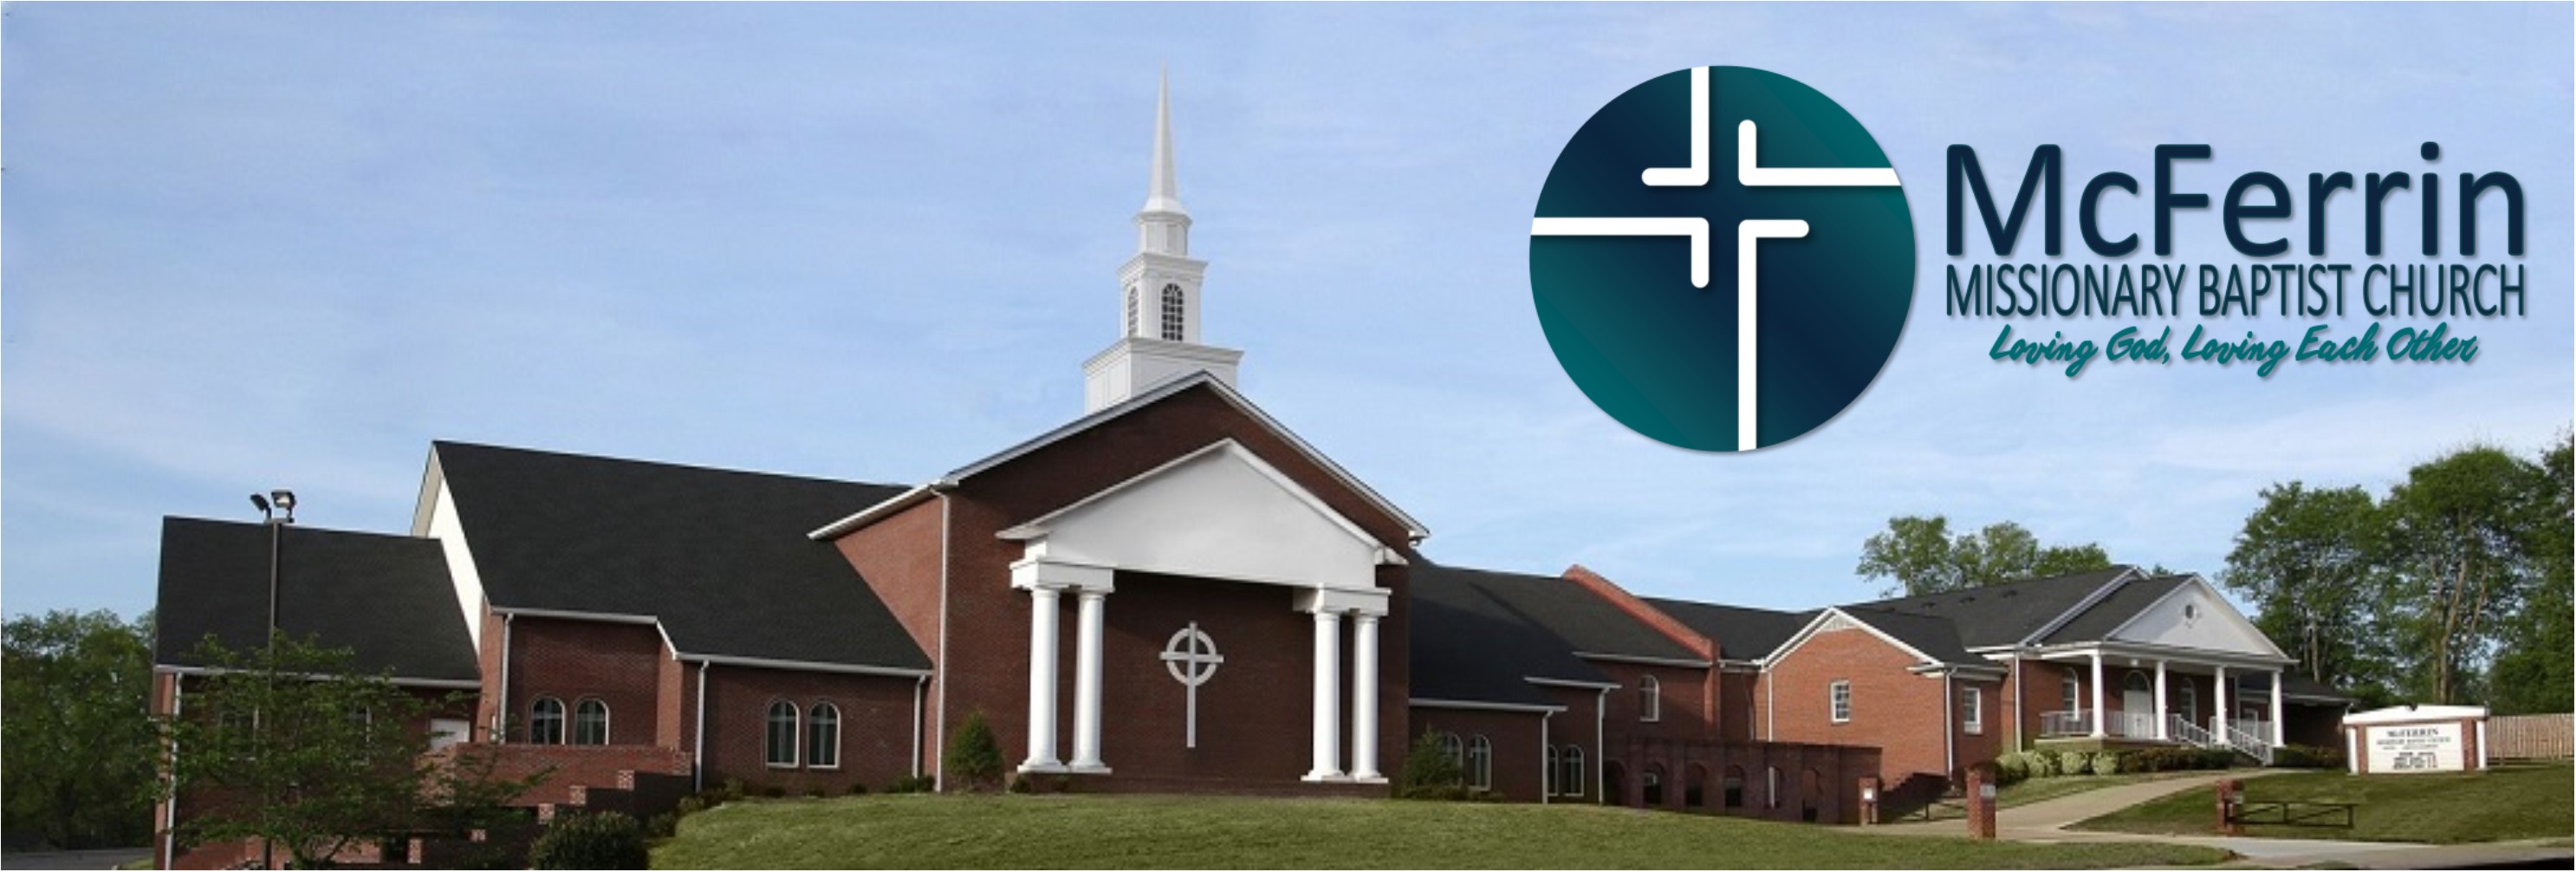 McFerrin Missionary Baptist Church